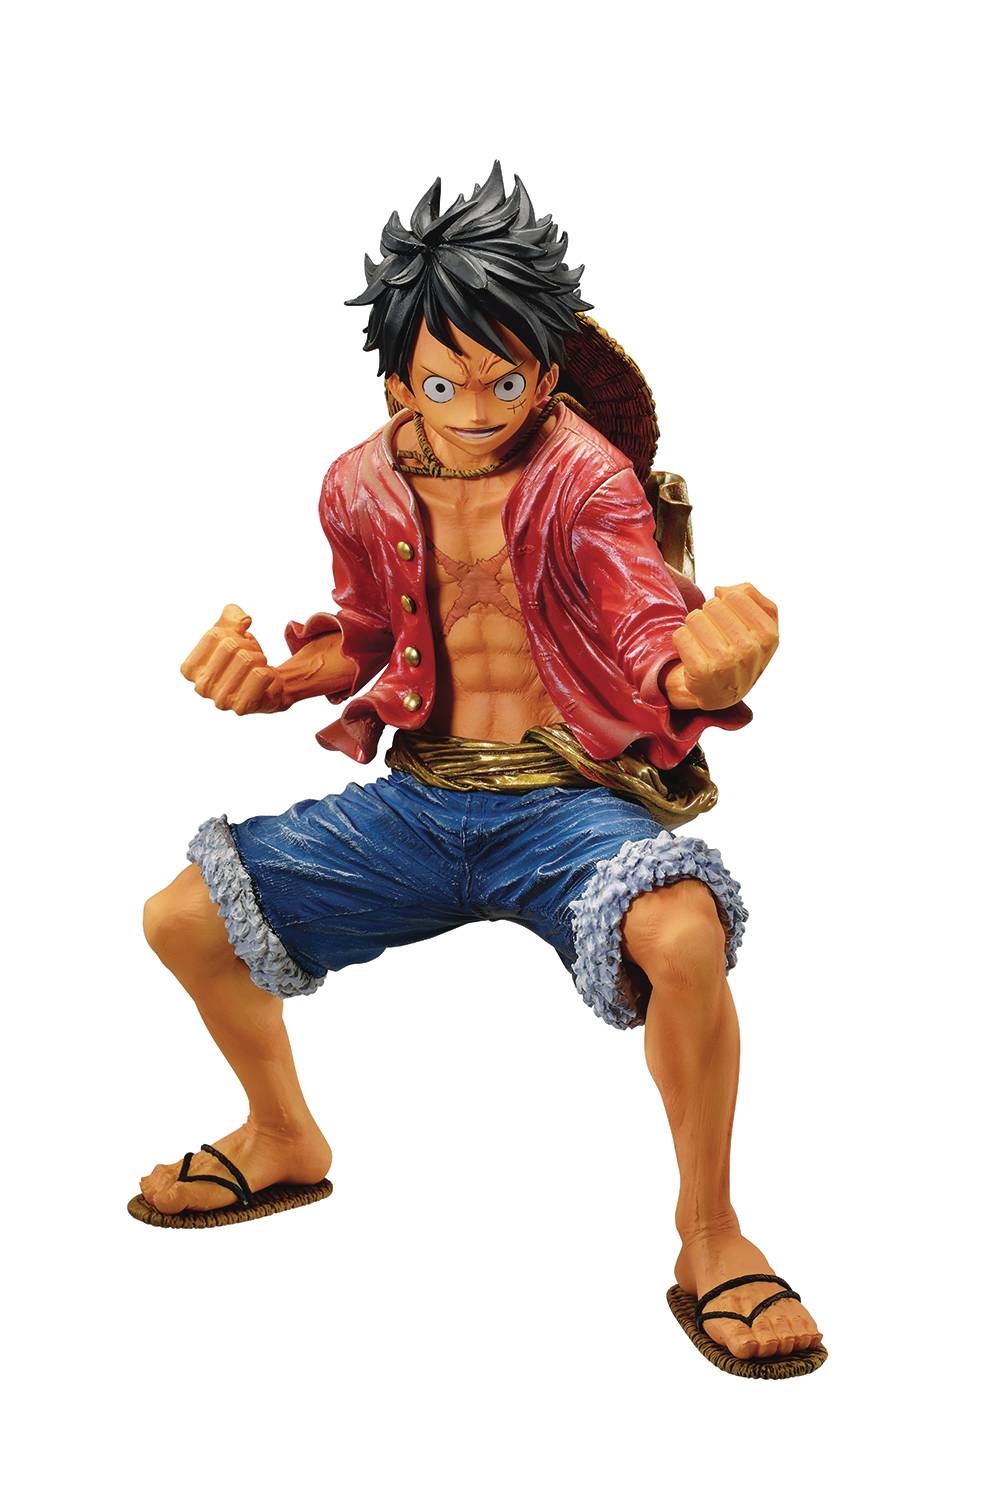 One Piece Luffy Sanji Usopp Bartolomeo Marco Bartholemew Kuma Rucchi Arlong  Nami Dracule Mihawk PVC Action Figure Model Toy Doll C0220 From Make03,  $19.14